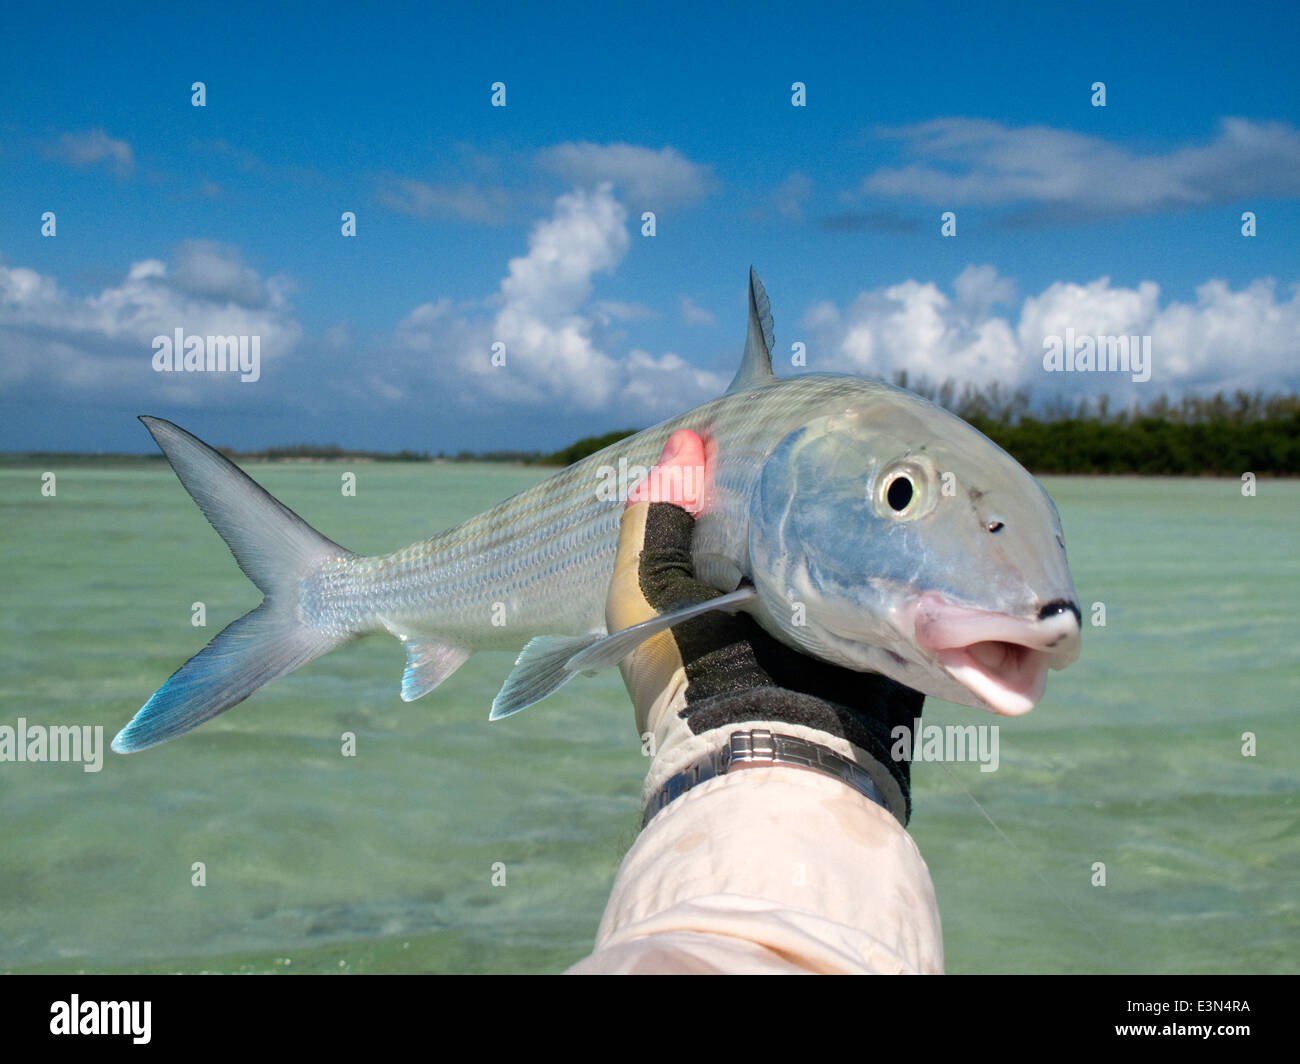 Bonefish Flats Bahamas Hi Res Stock Photography And Images Alamy